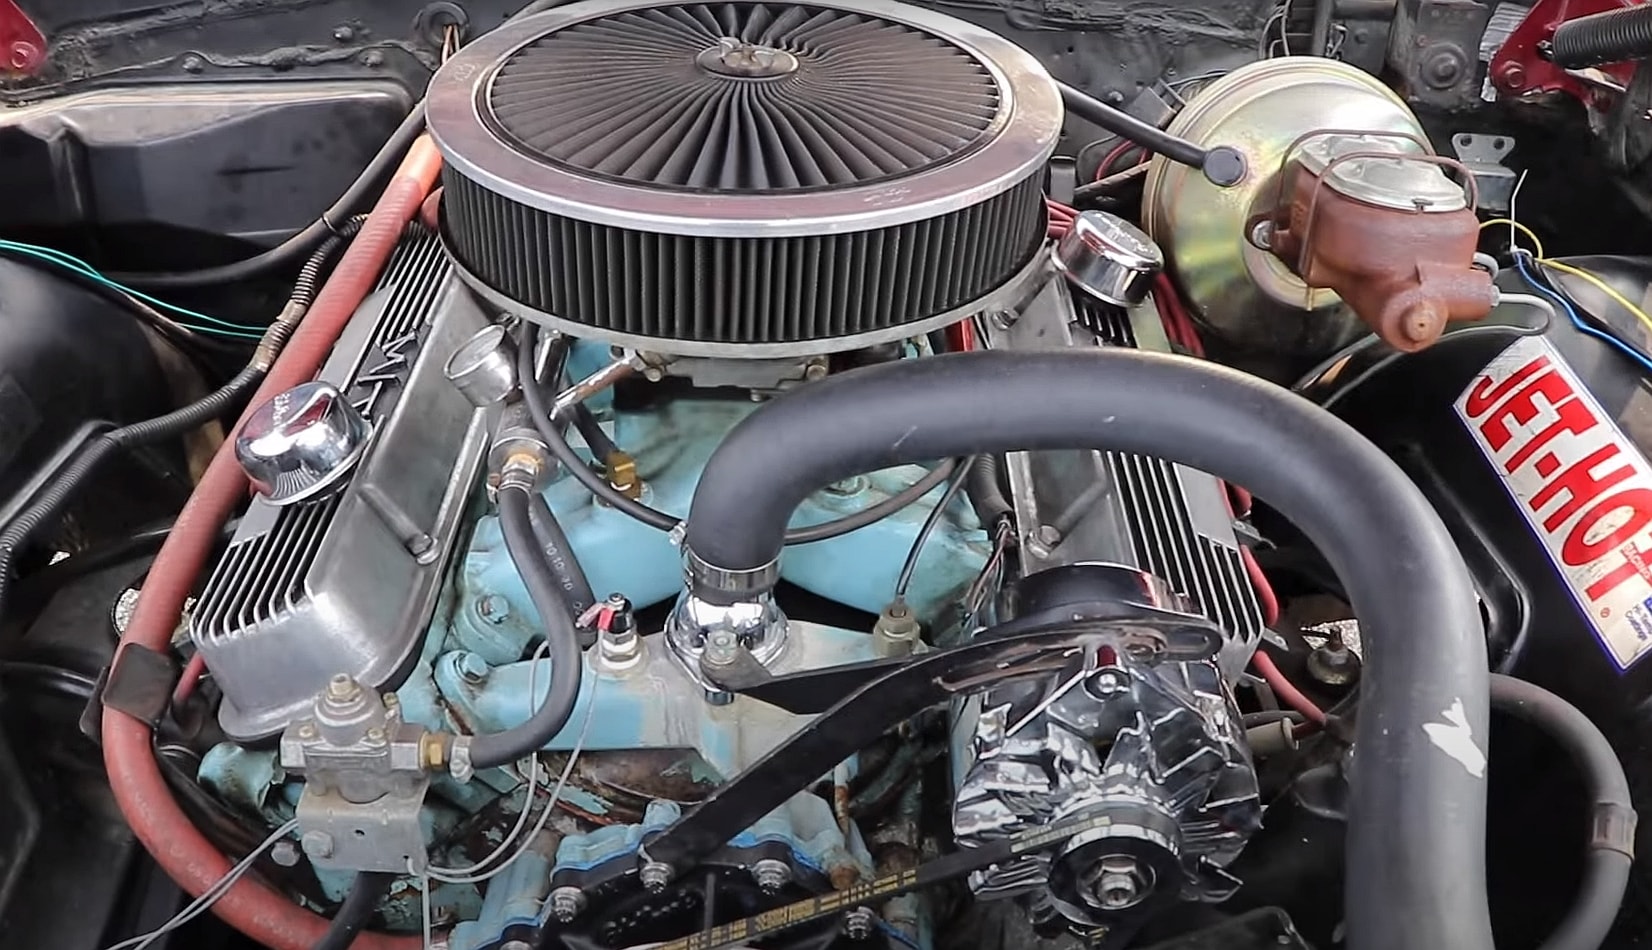 Pontiac LeMans Beyond the GTO - Muscle, Performance, Legacy